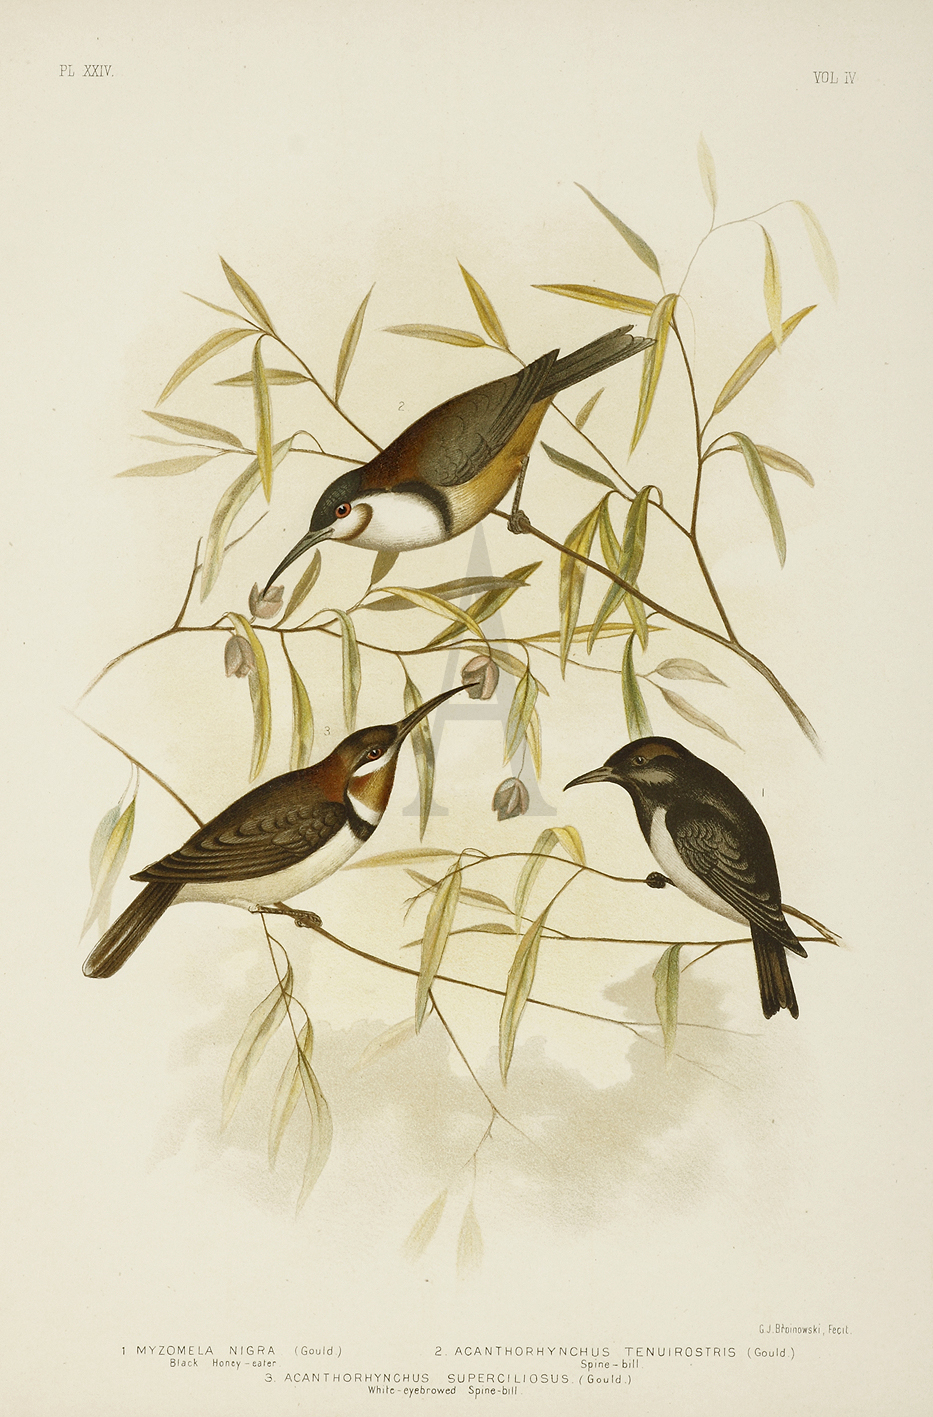 1.Myzomela Nigra. Black Honey-eater. 2.Acanthorhynchus Tenuirostris. Spine-bill. 3.Acanthorhynchus Superciliosus. White-eyebrowed Spine-bill. - Antique Print from 1889